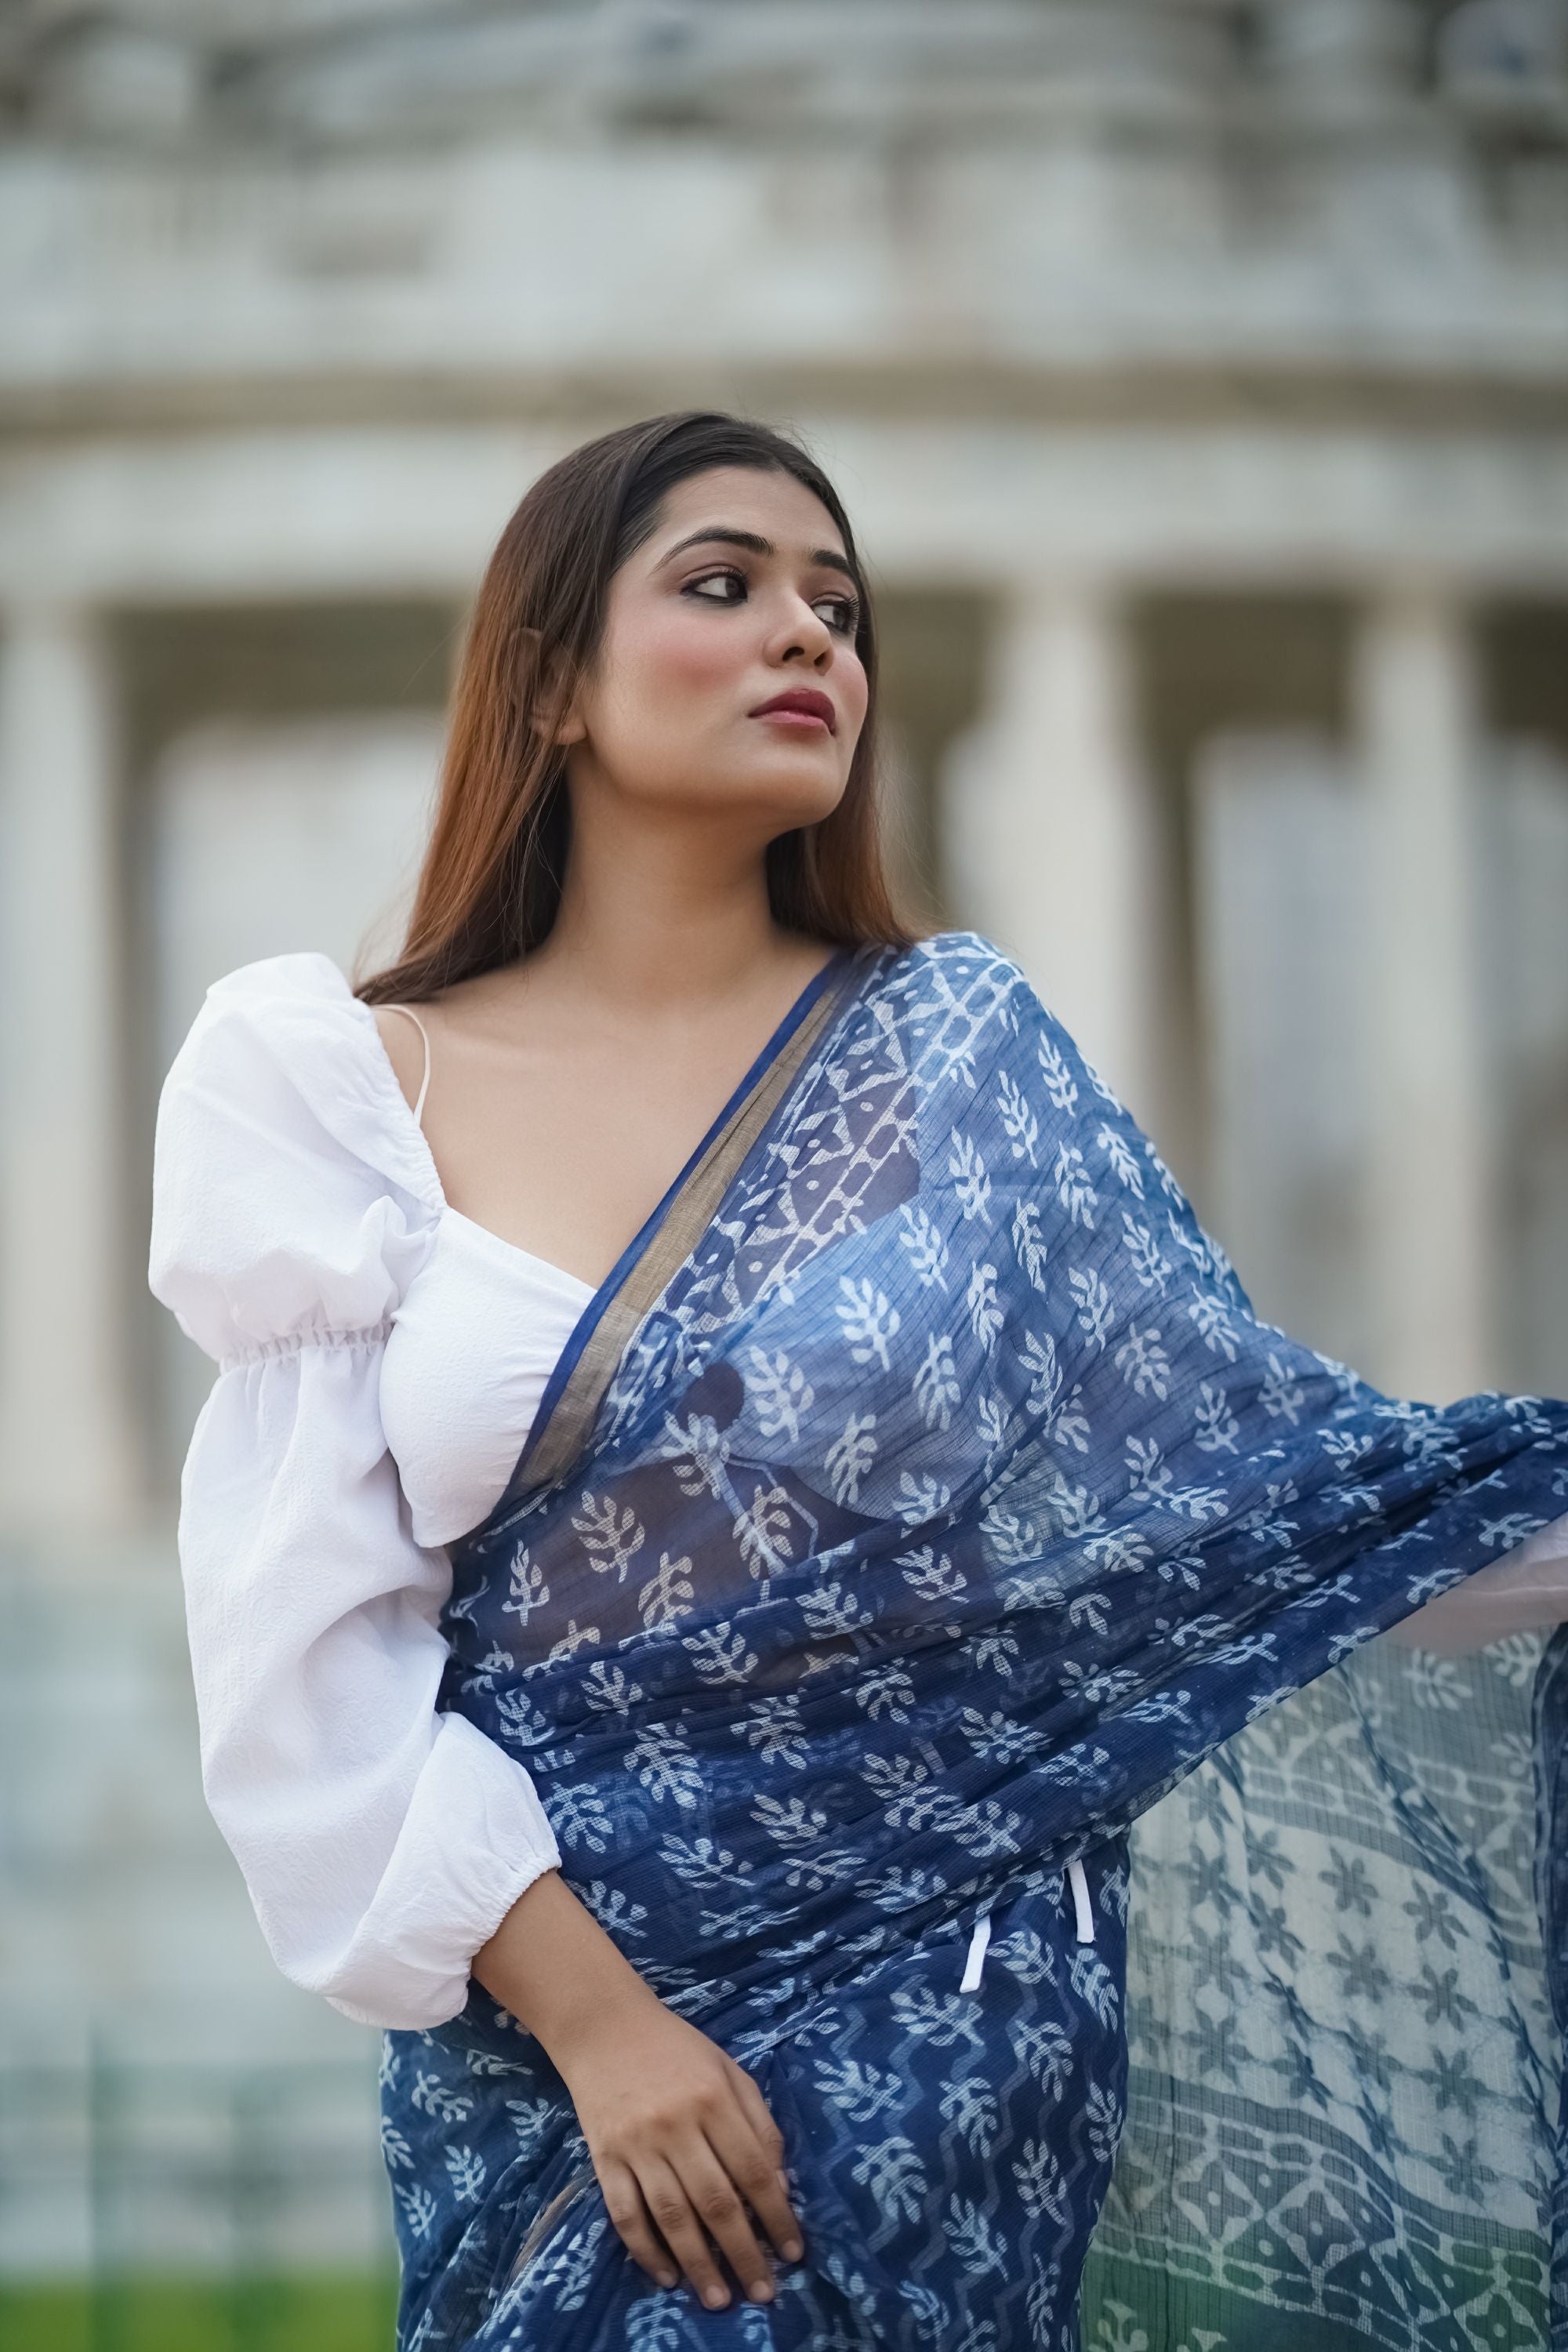 KaisorI Malhar Seher Kota blockprinted cotton silk saree Kaisori